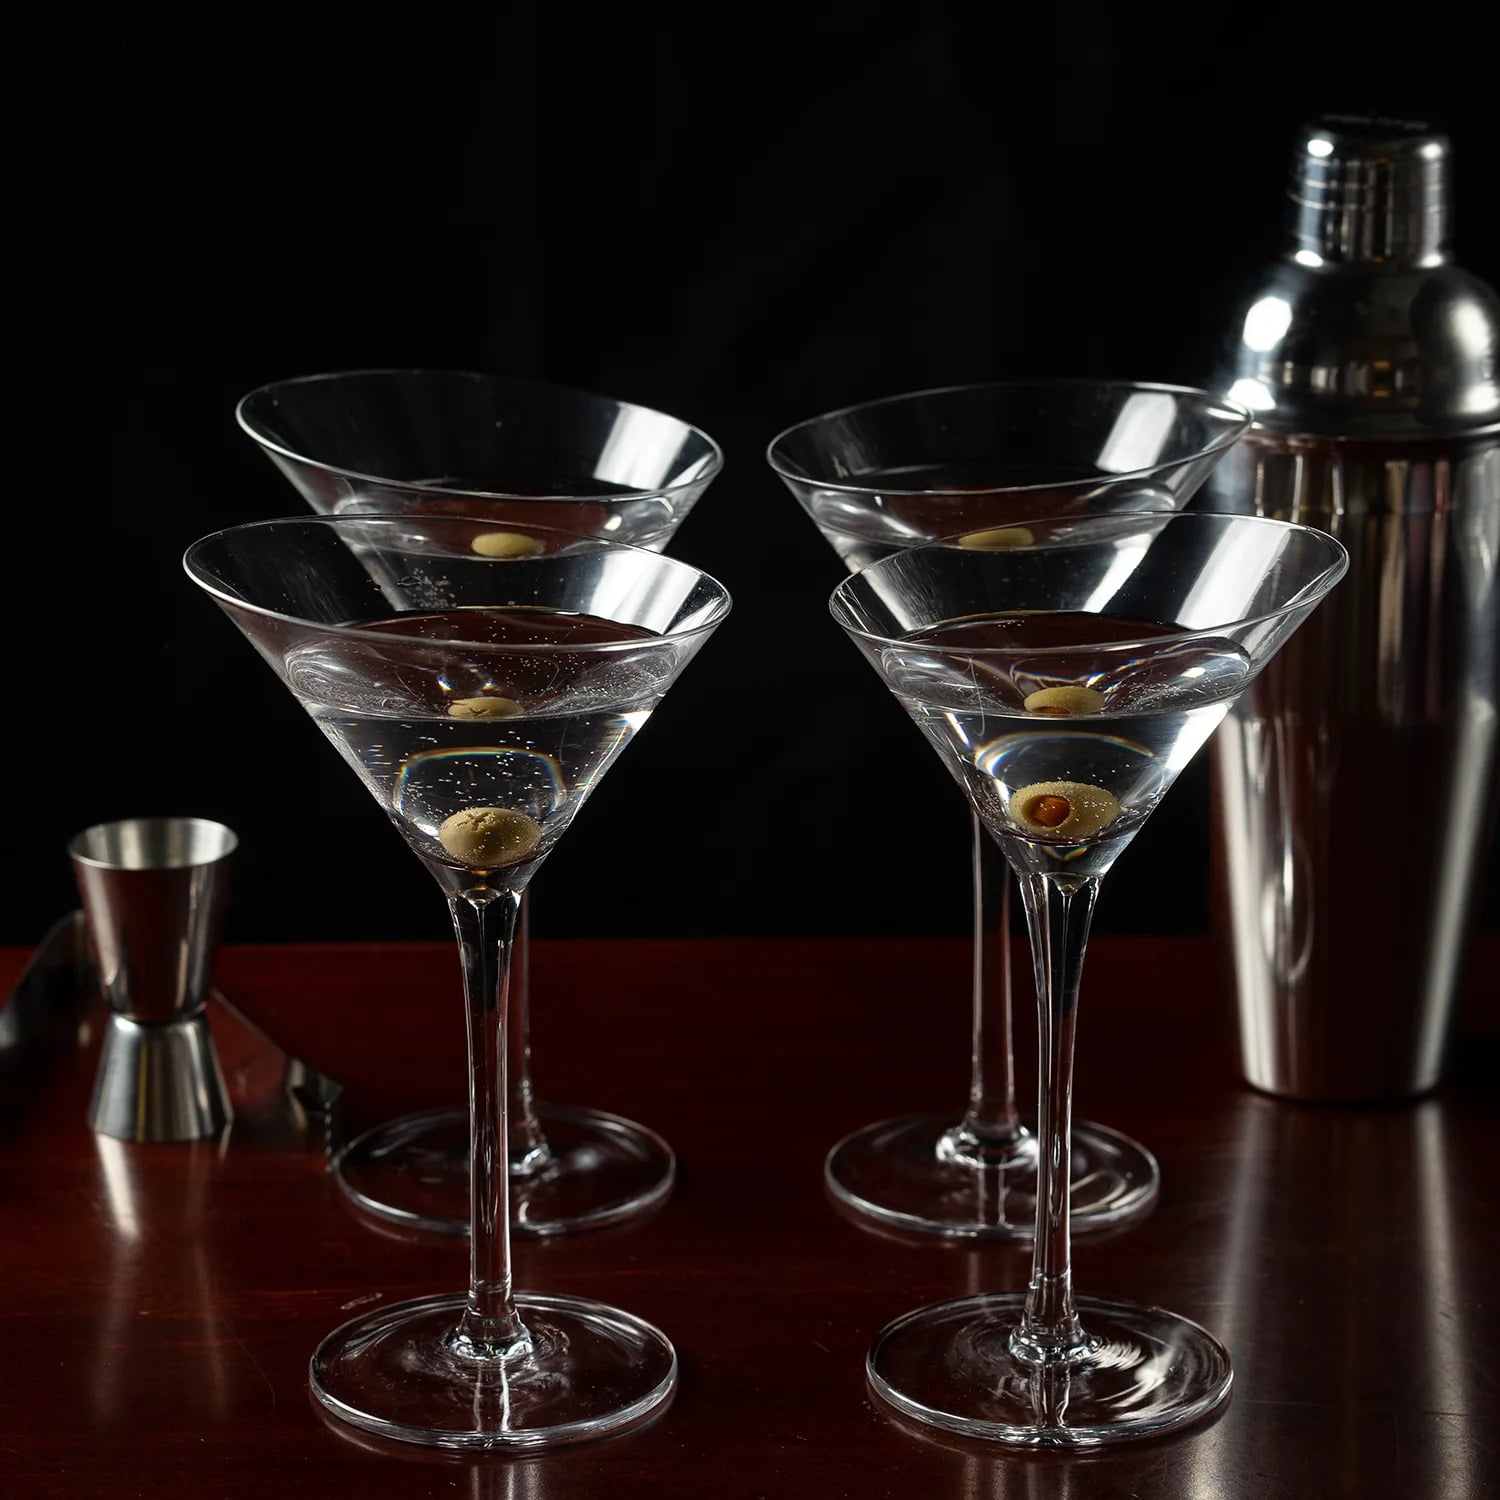 Set of 6 Martini Glasses, Cosmopolitan Glasses Margarita Glasses, Whiskey,  Gin, Tequila, Tall Cockta…See more Set of 6 Martini Glasses, Cosmopolitan